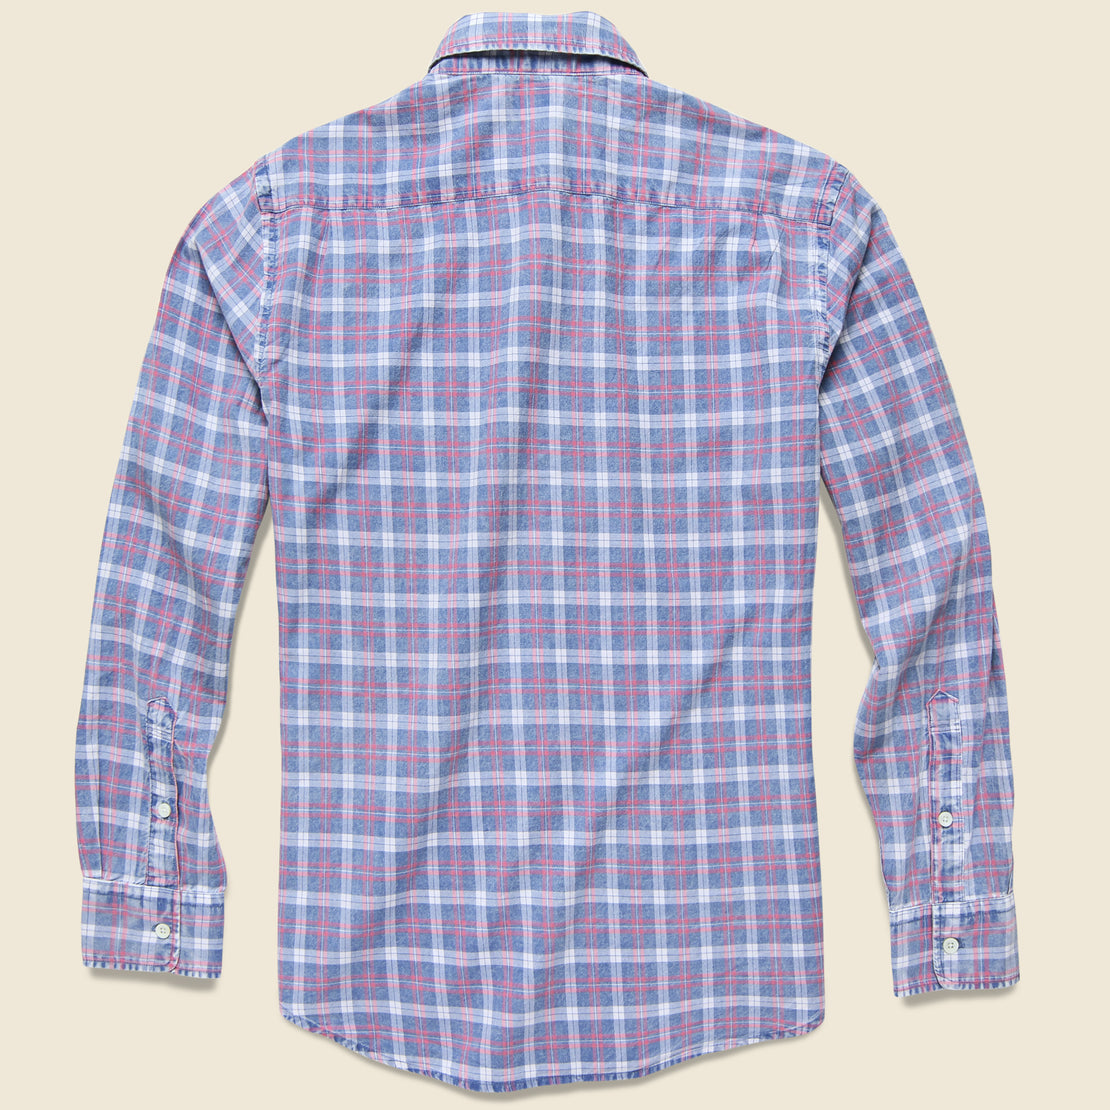 Ventura Shirt - Indigo White Plaid - Faherty - STAG Provisions - Tops - L/S Woven - Plaid